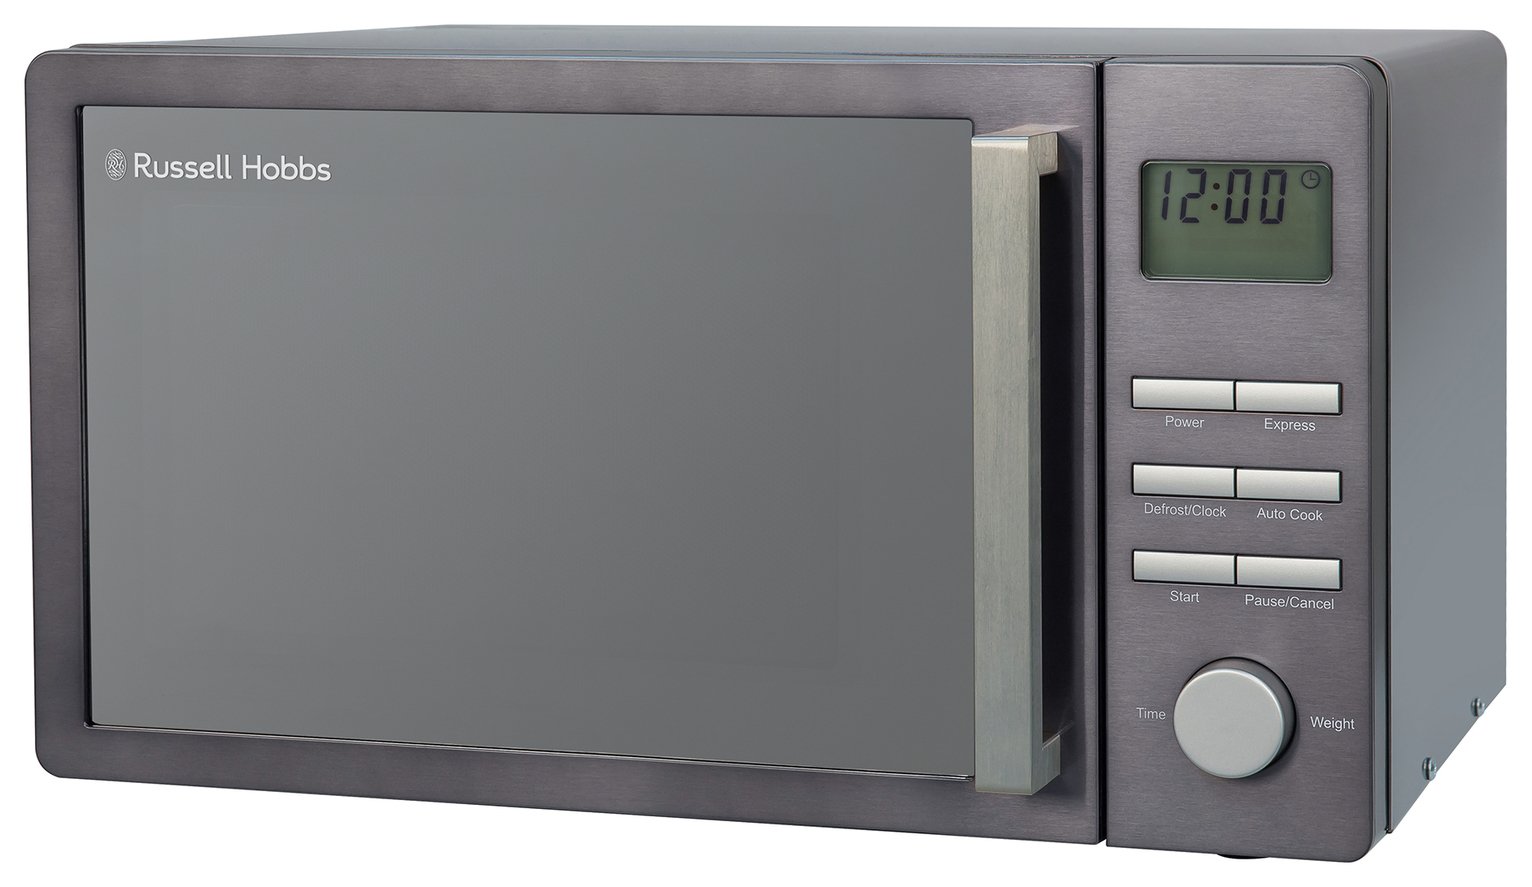 Russell Hobbs Luna 800W Standard Microwave RHMDL801G - Grey